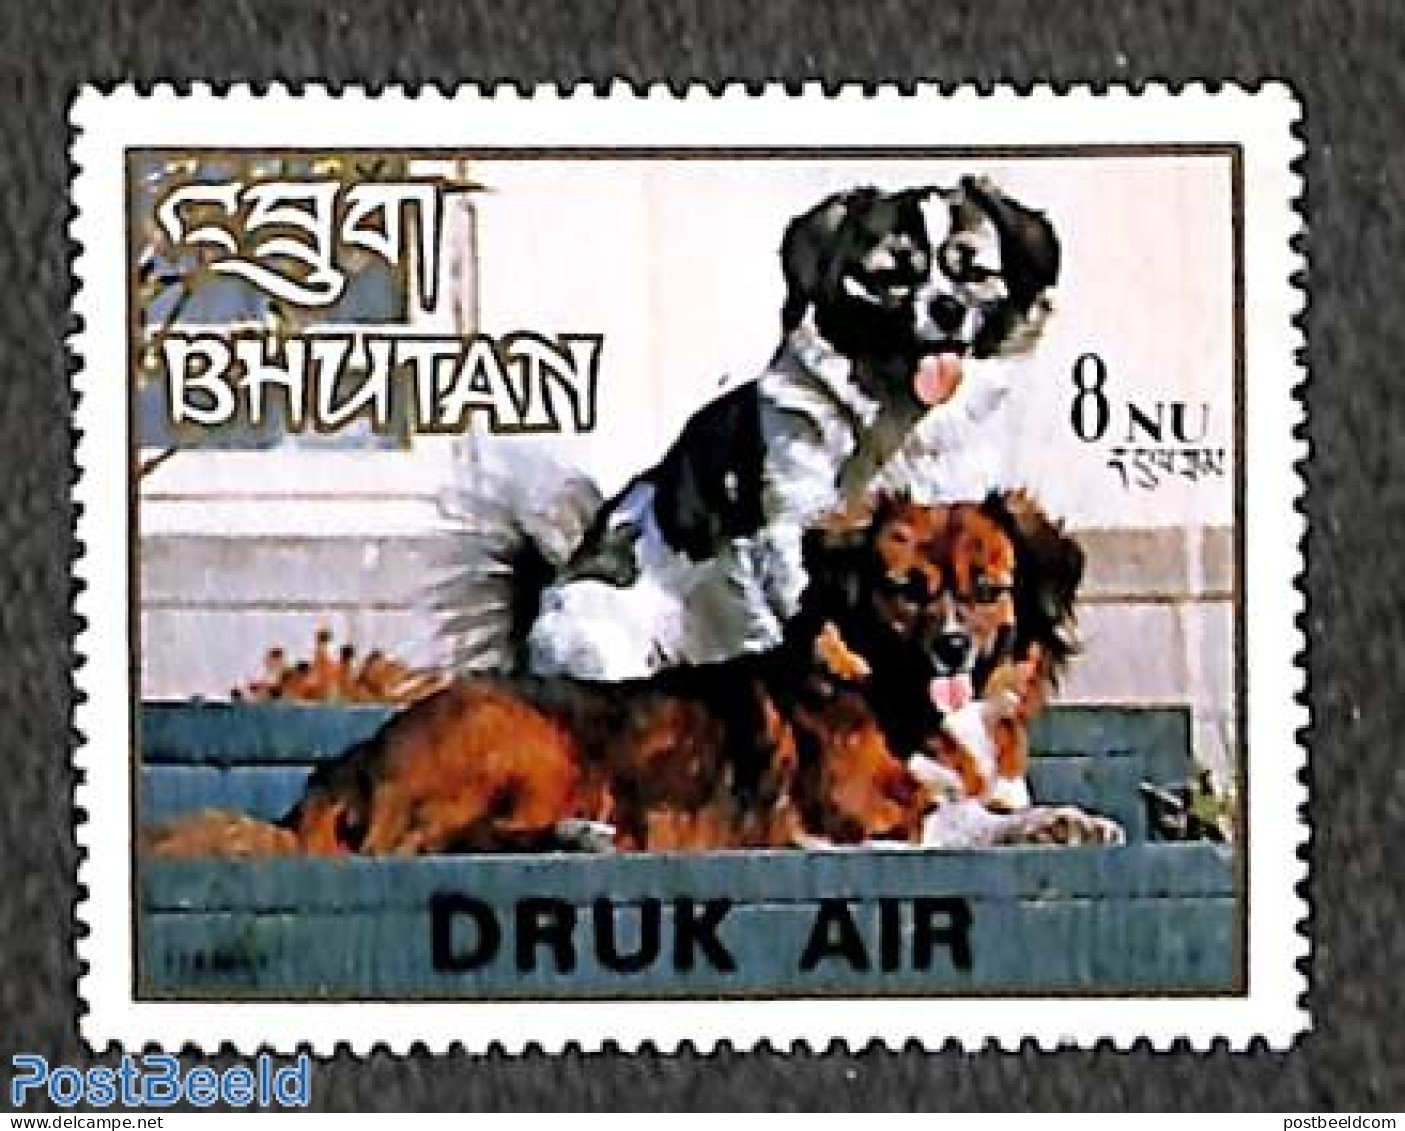 Bhutan 1983 8Nu, Druk Air Overprint 1v, Mint NH, Nature - Dogs - Bhutan